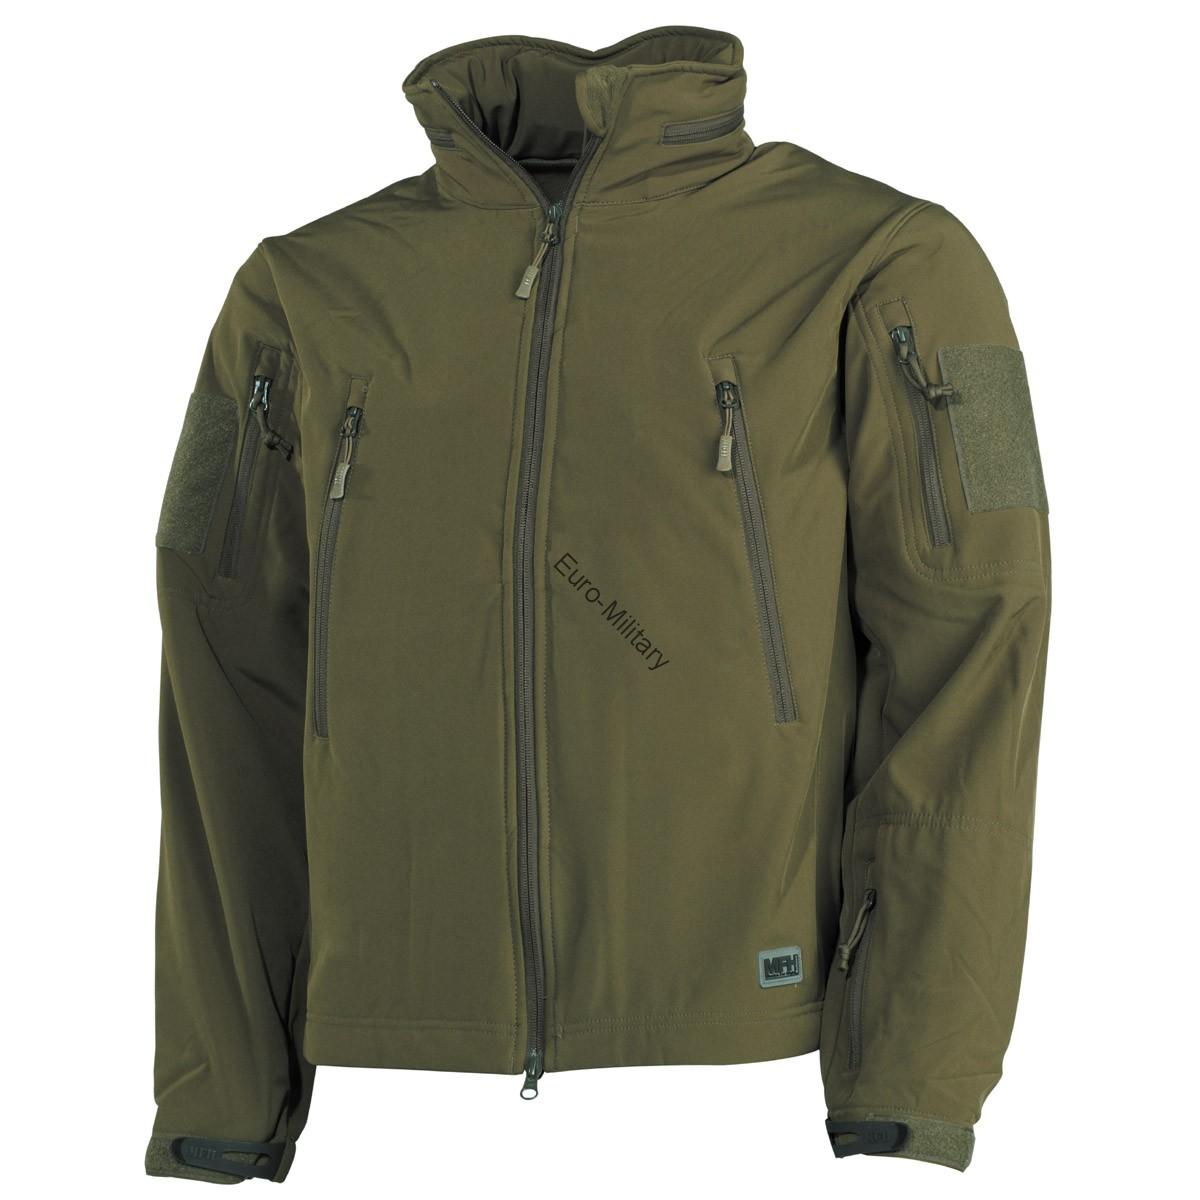 Premium High Defense Tactical Waterproof Soft Shell Jacket SCORPION - OD Green